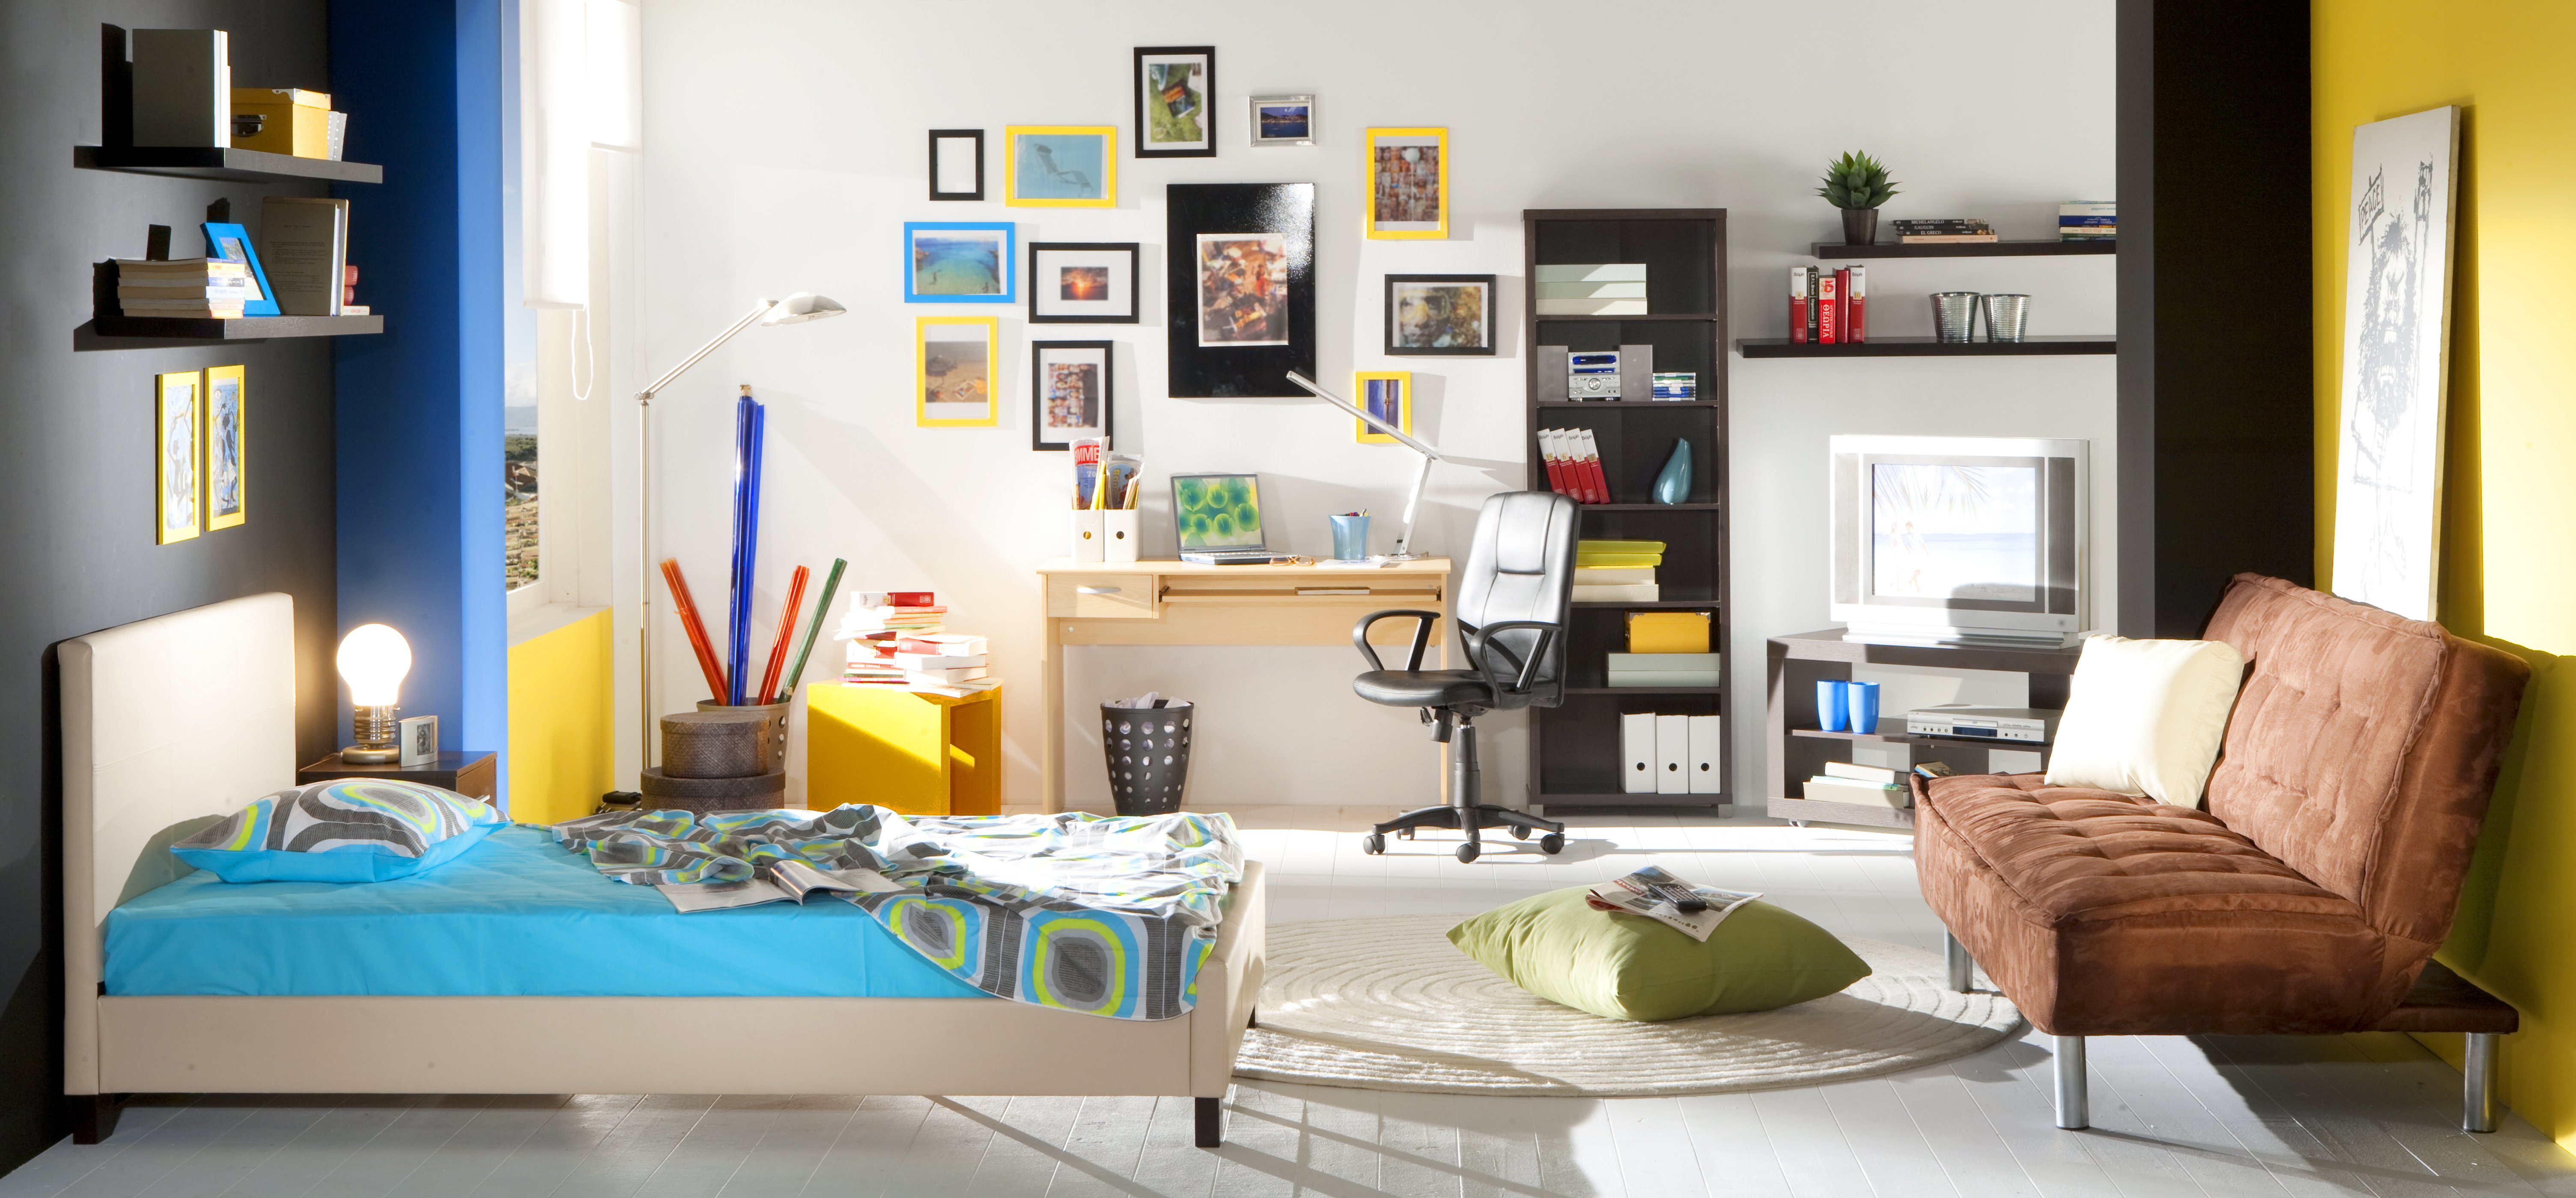 A teenagers bedroom. Image credit: Shutterstock